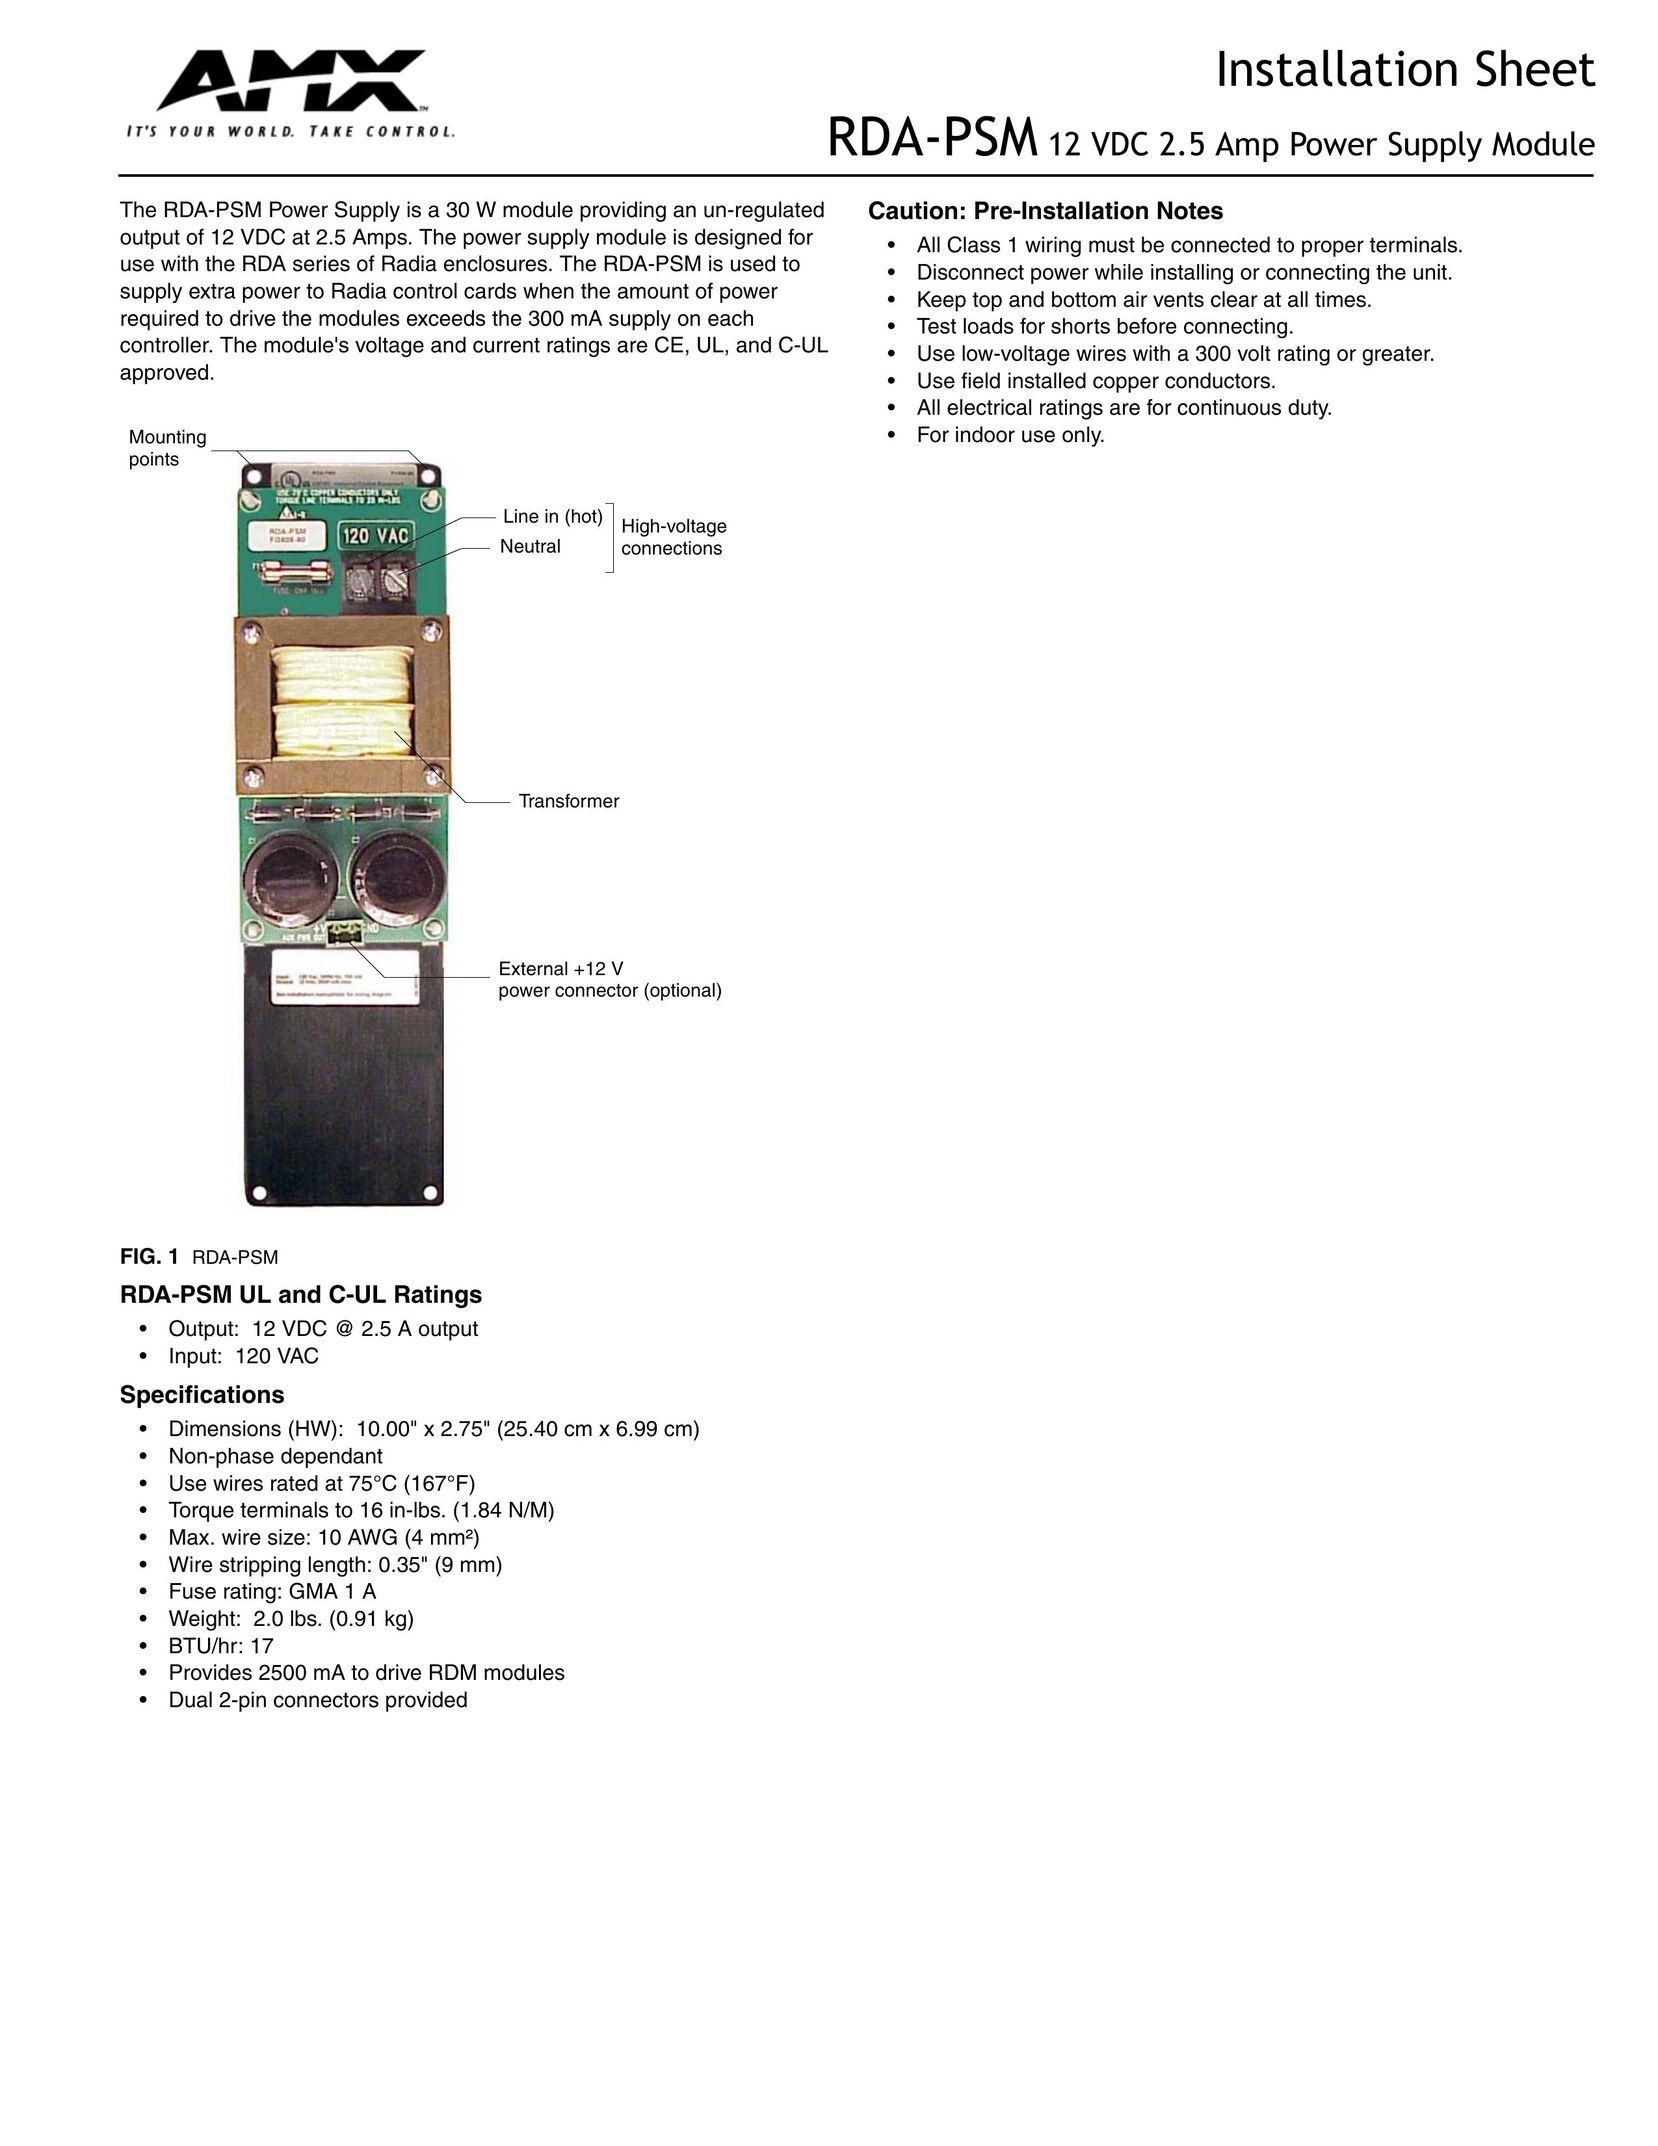 AMX RDA-PSM Power Supply User Manual